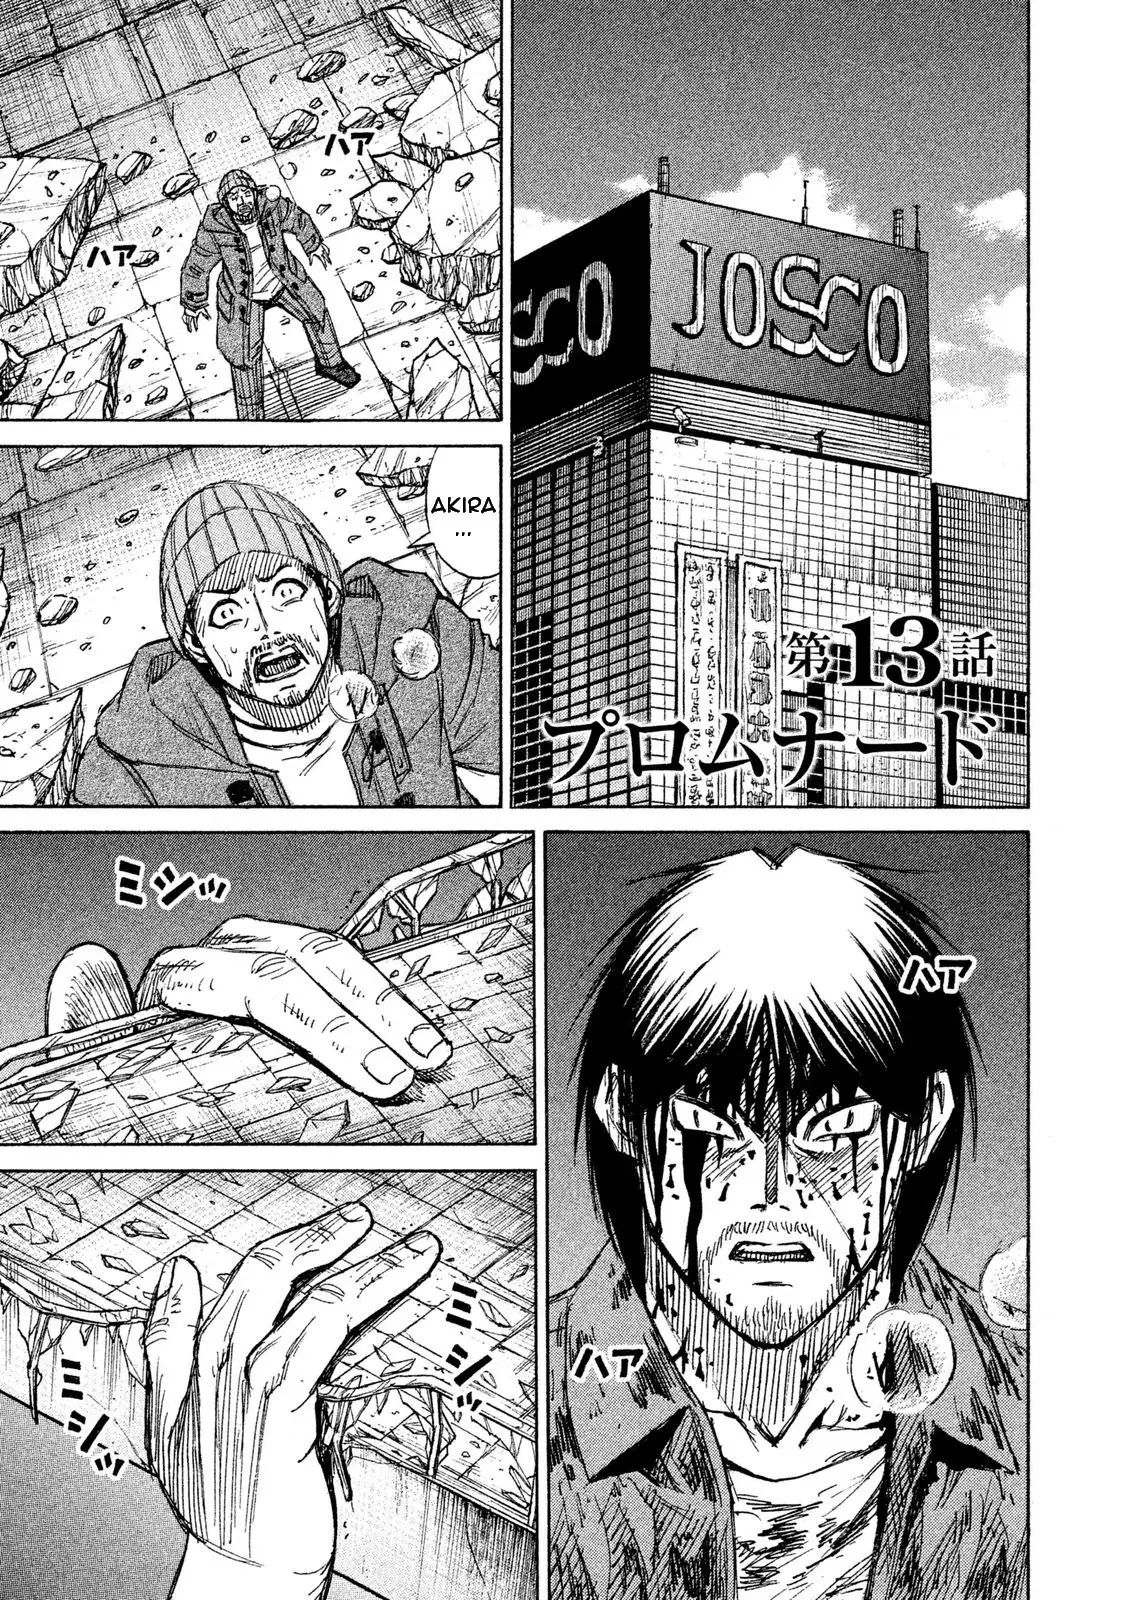 Higanjima - 48 Days Later - 13 page 1-f42a1613